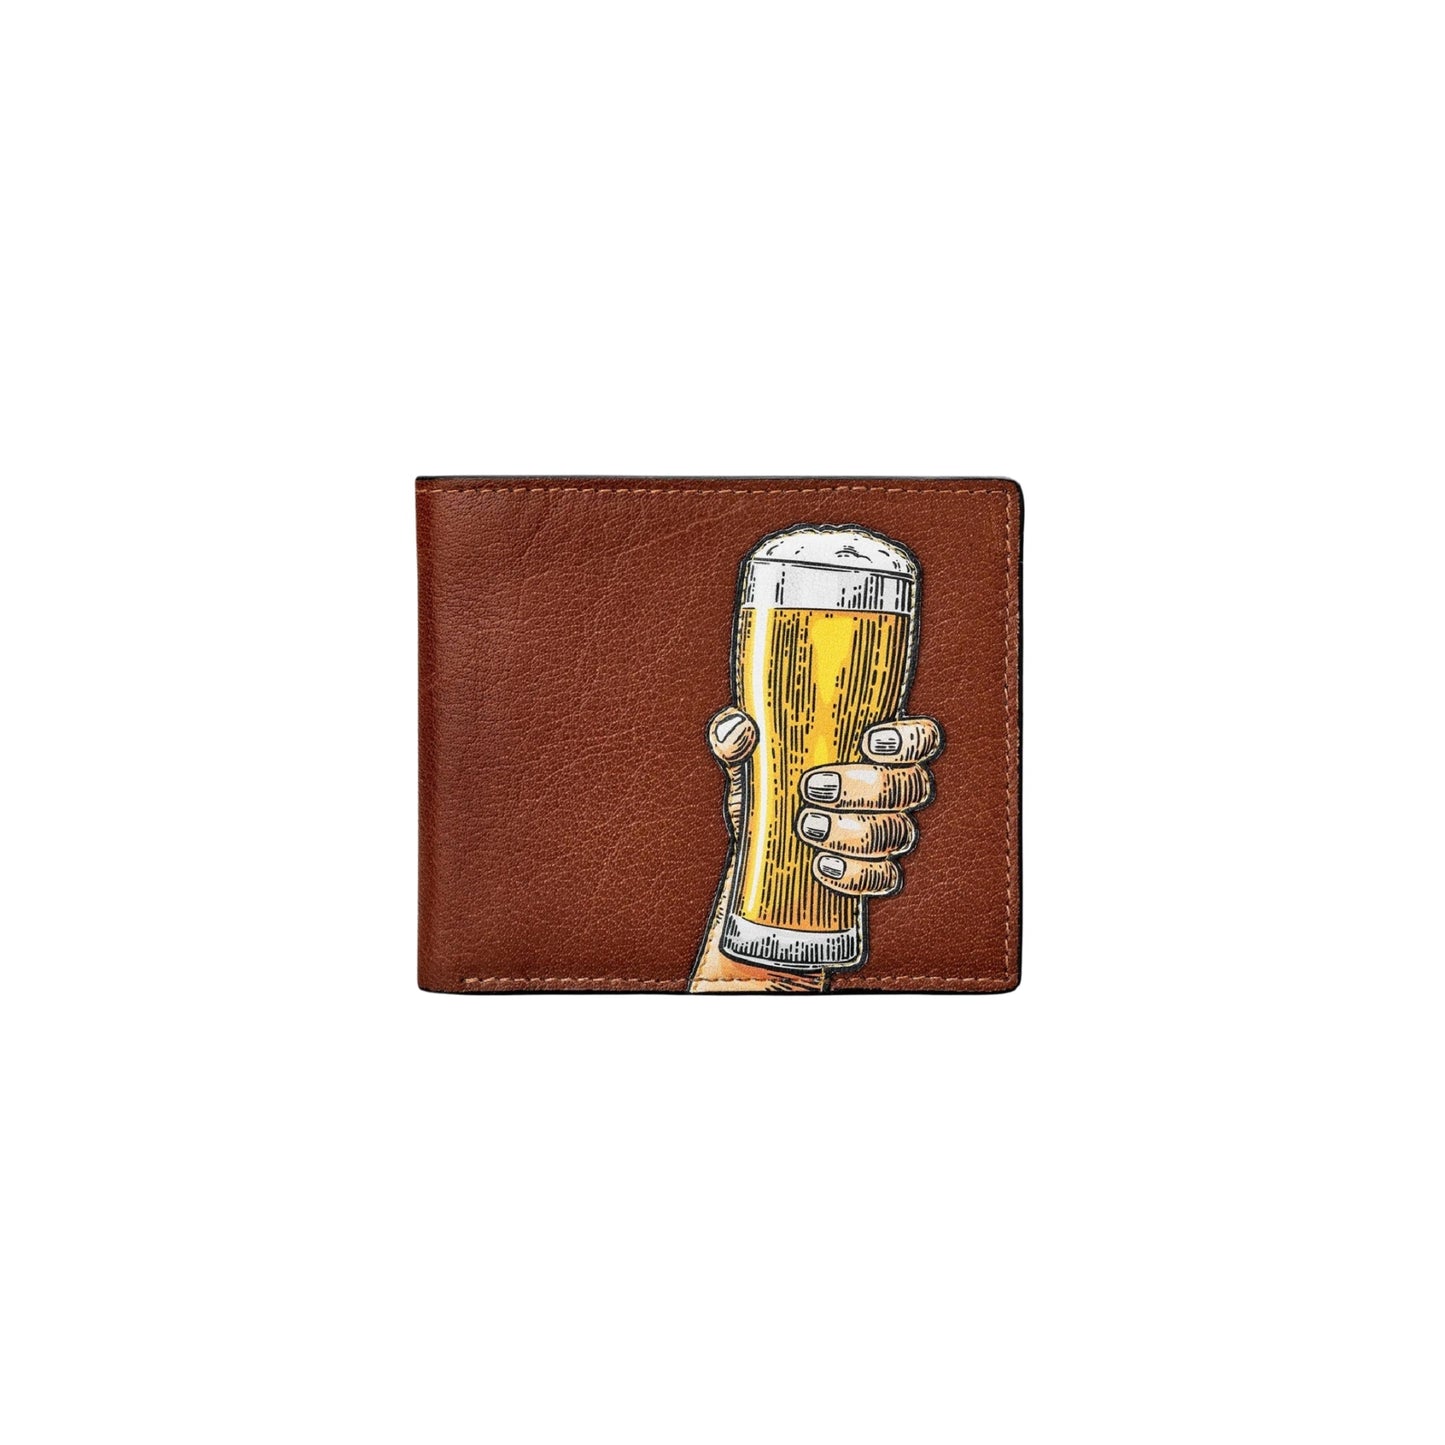 Cheers Men's Leather Wallet - Brown